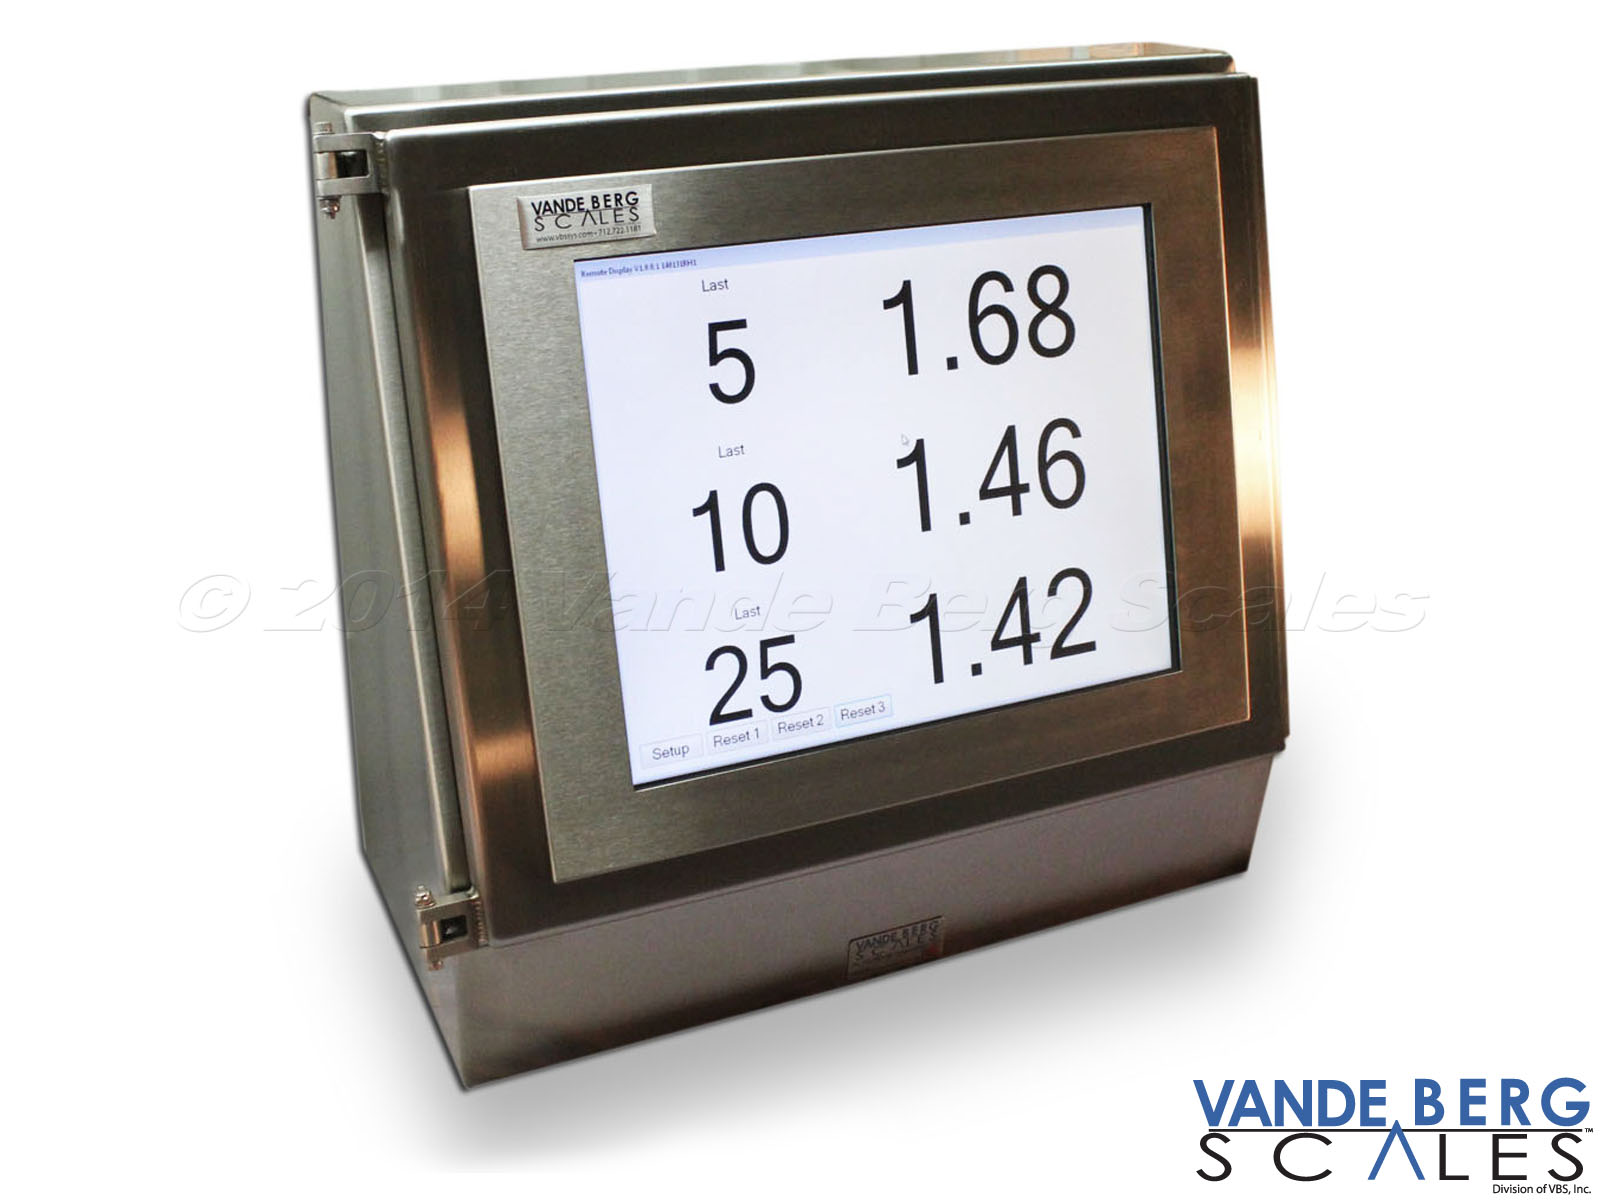 Mark Display - Antibus Scales & Barcode Systems